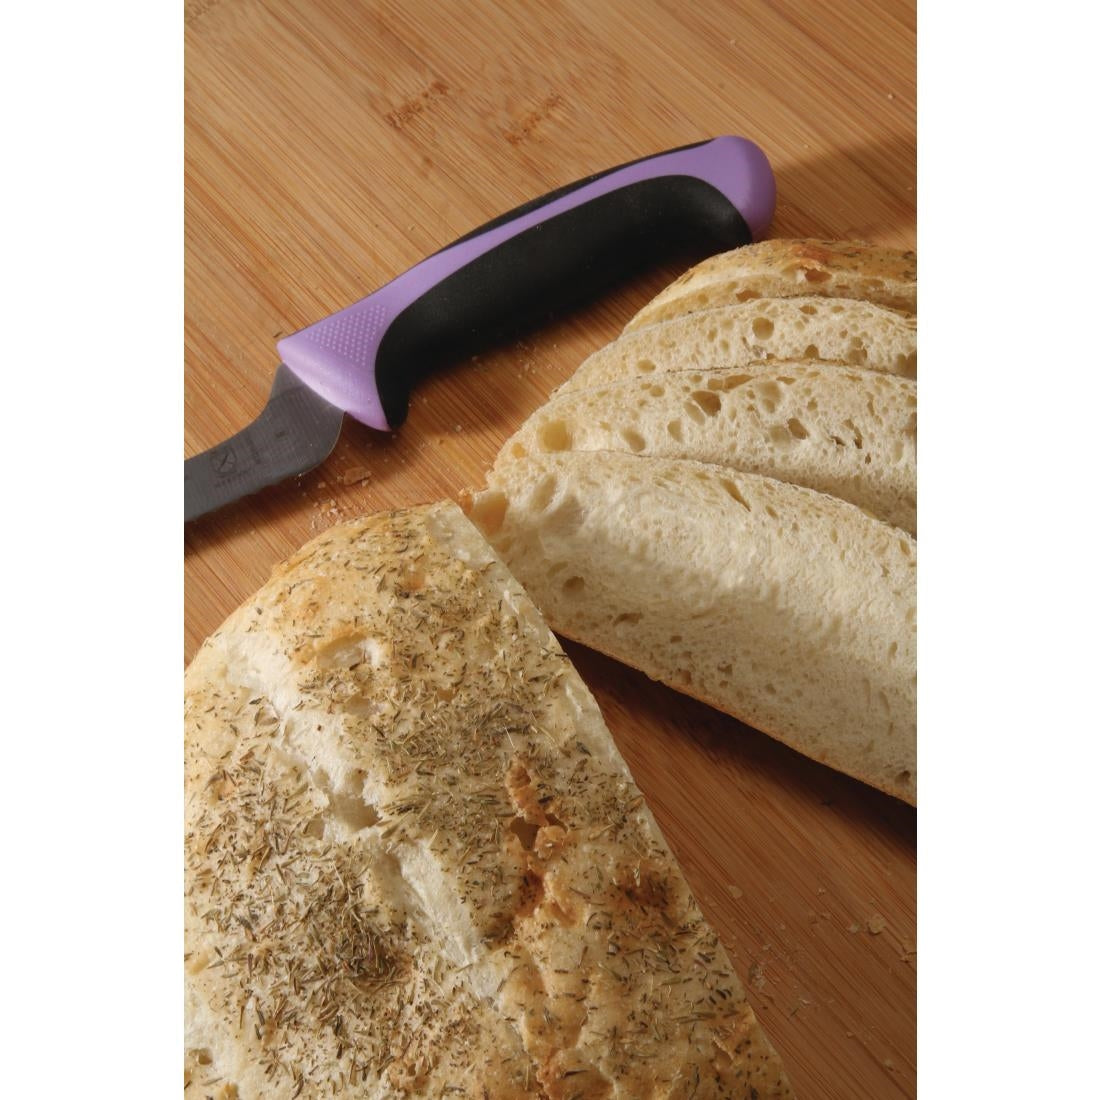 FB504 Mercer Millennia Culinary Allergen Safety Offset Serrated Bread Knife 20cm JD Catering Equipment Solutions Ltd